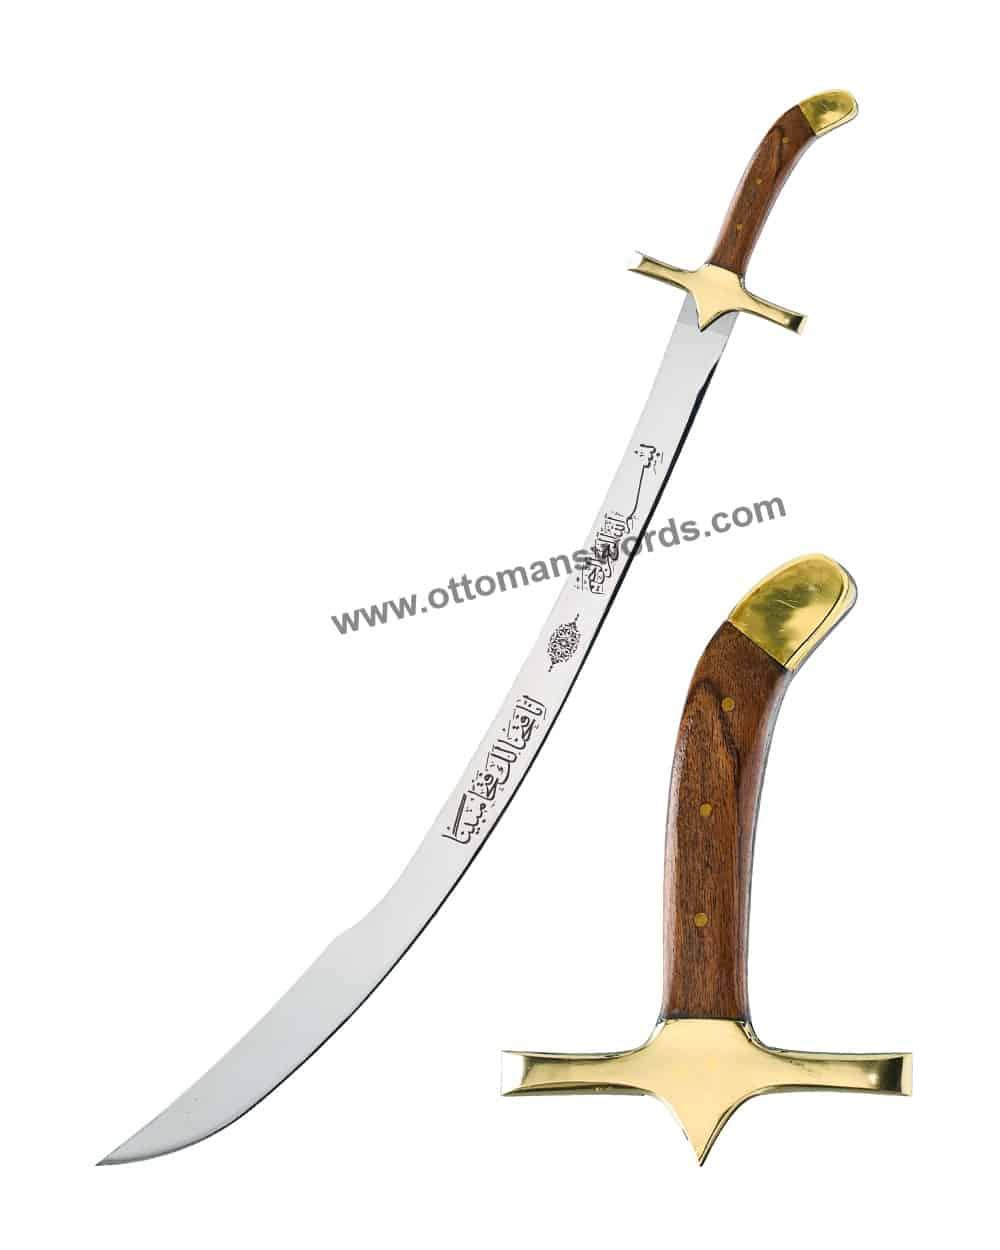 ottoman sword for sale